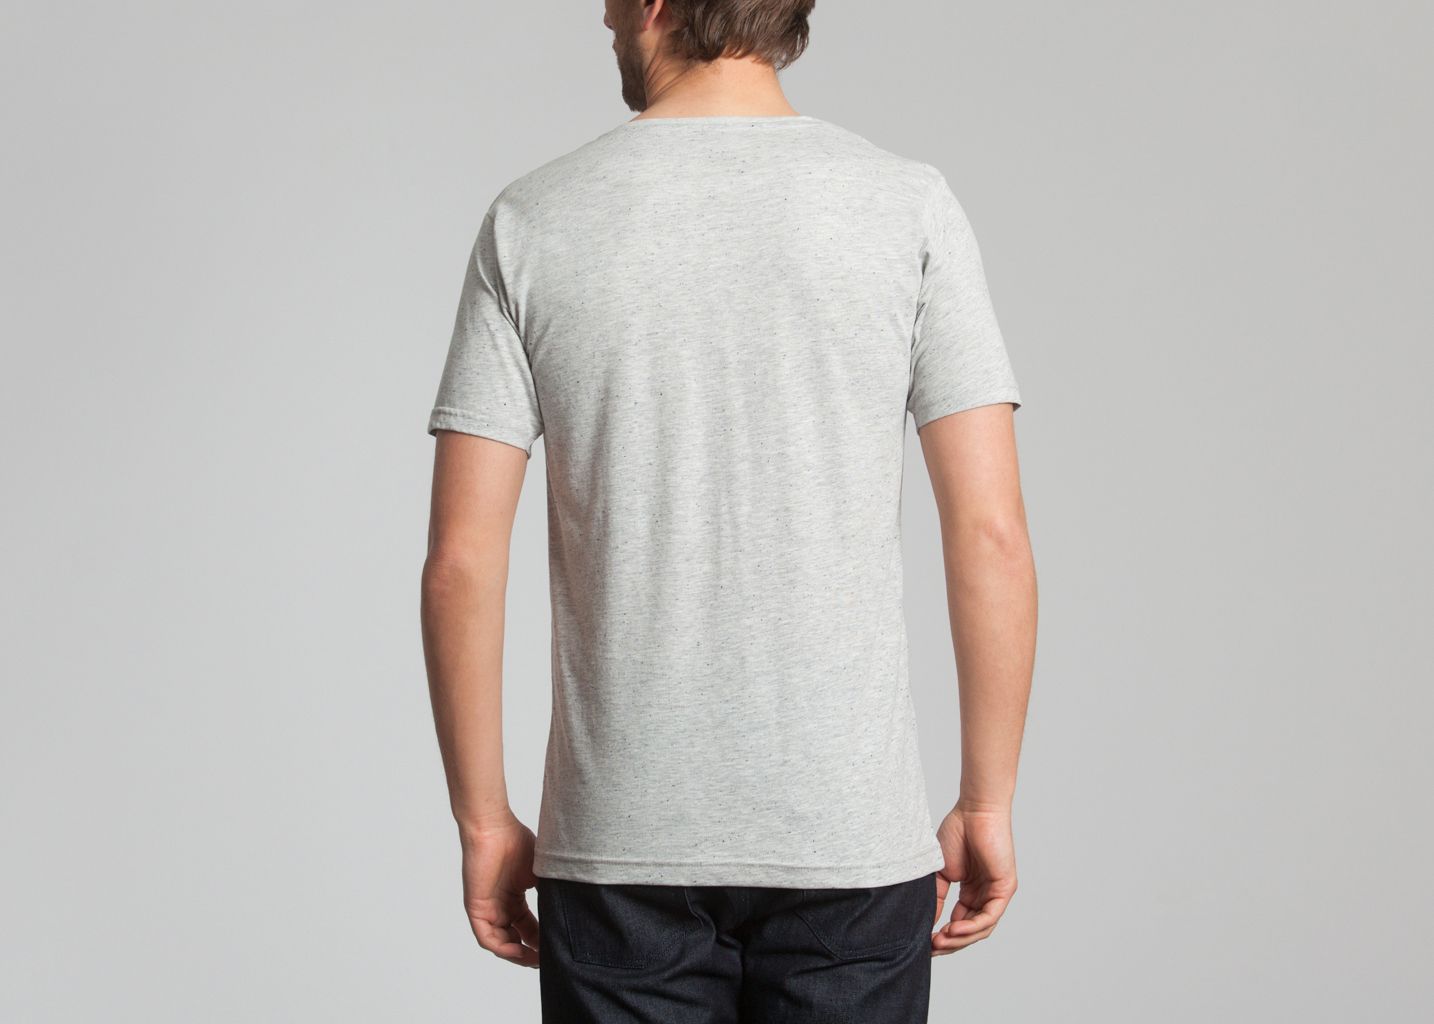 Same Tshirt Mamama Grey on sale at LEXCEPTION.COM